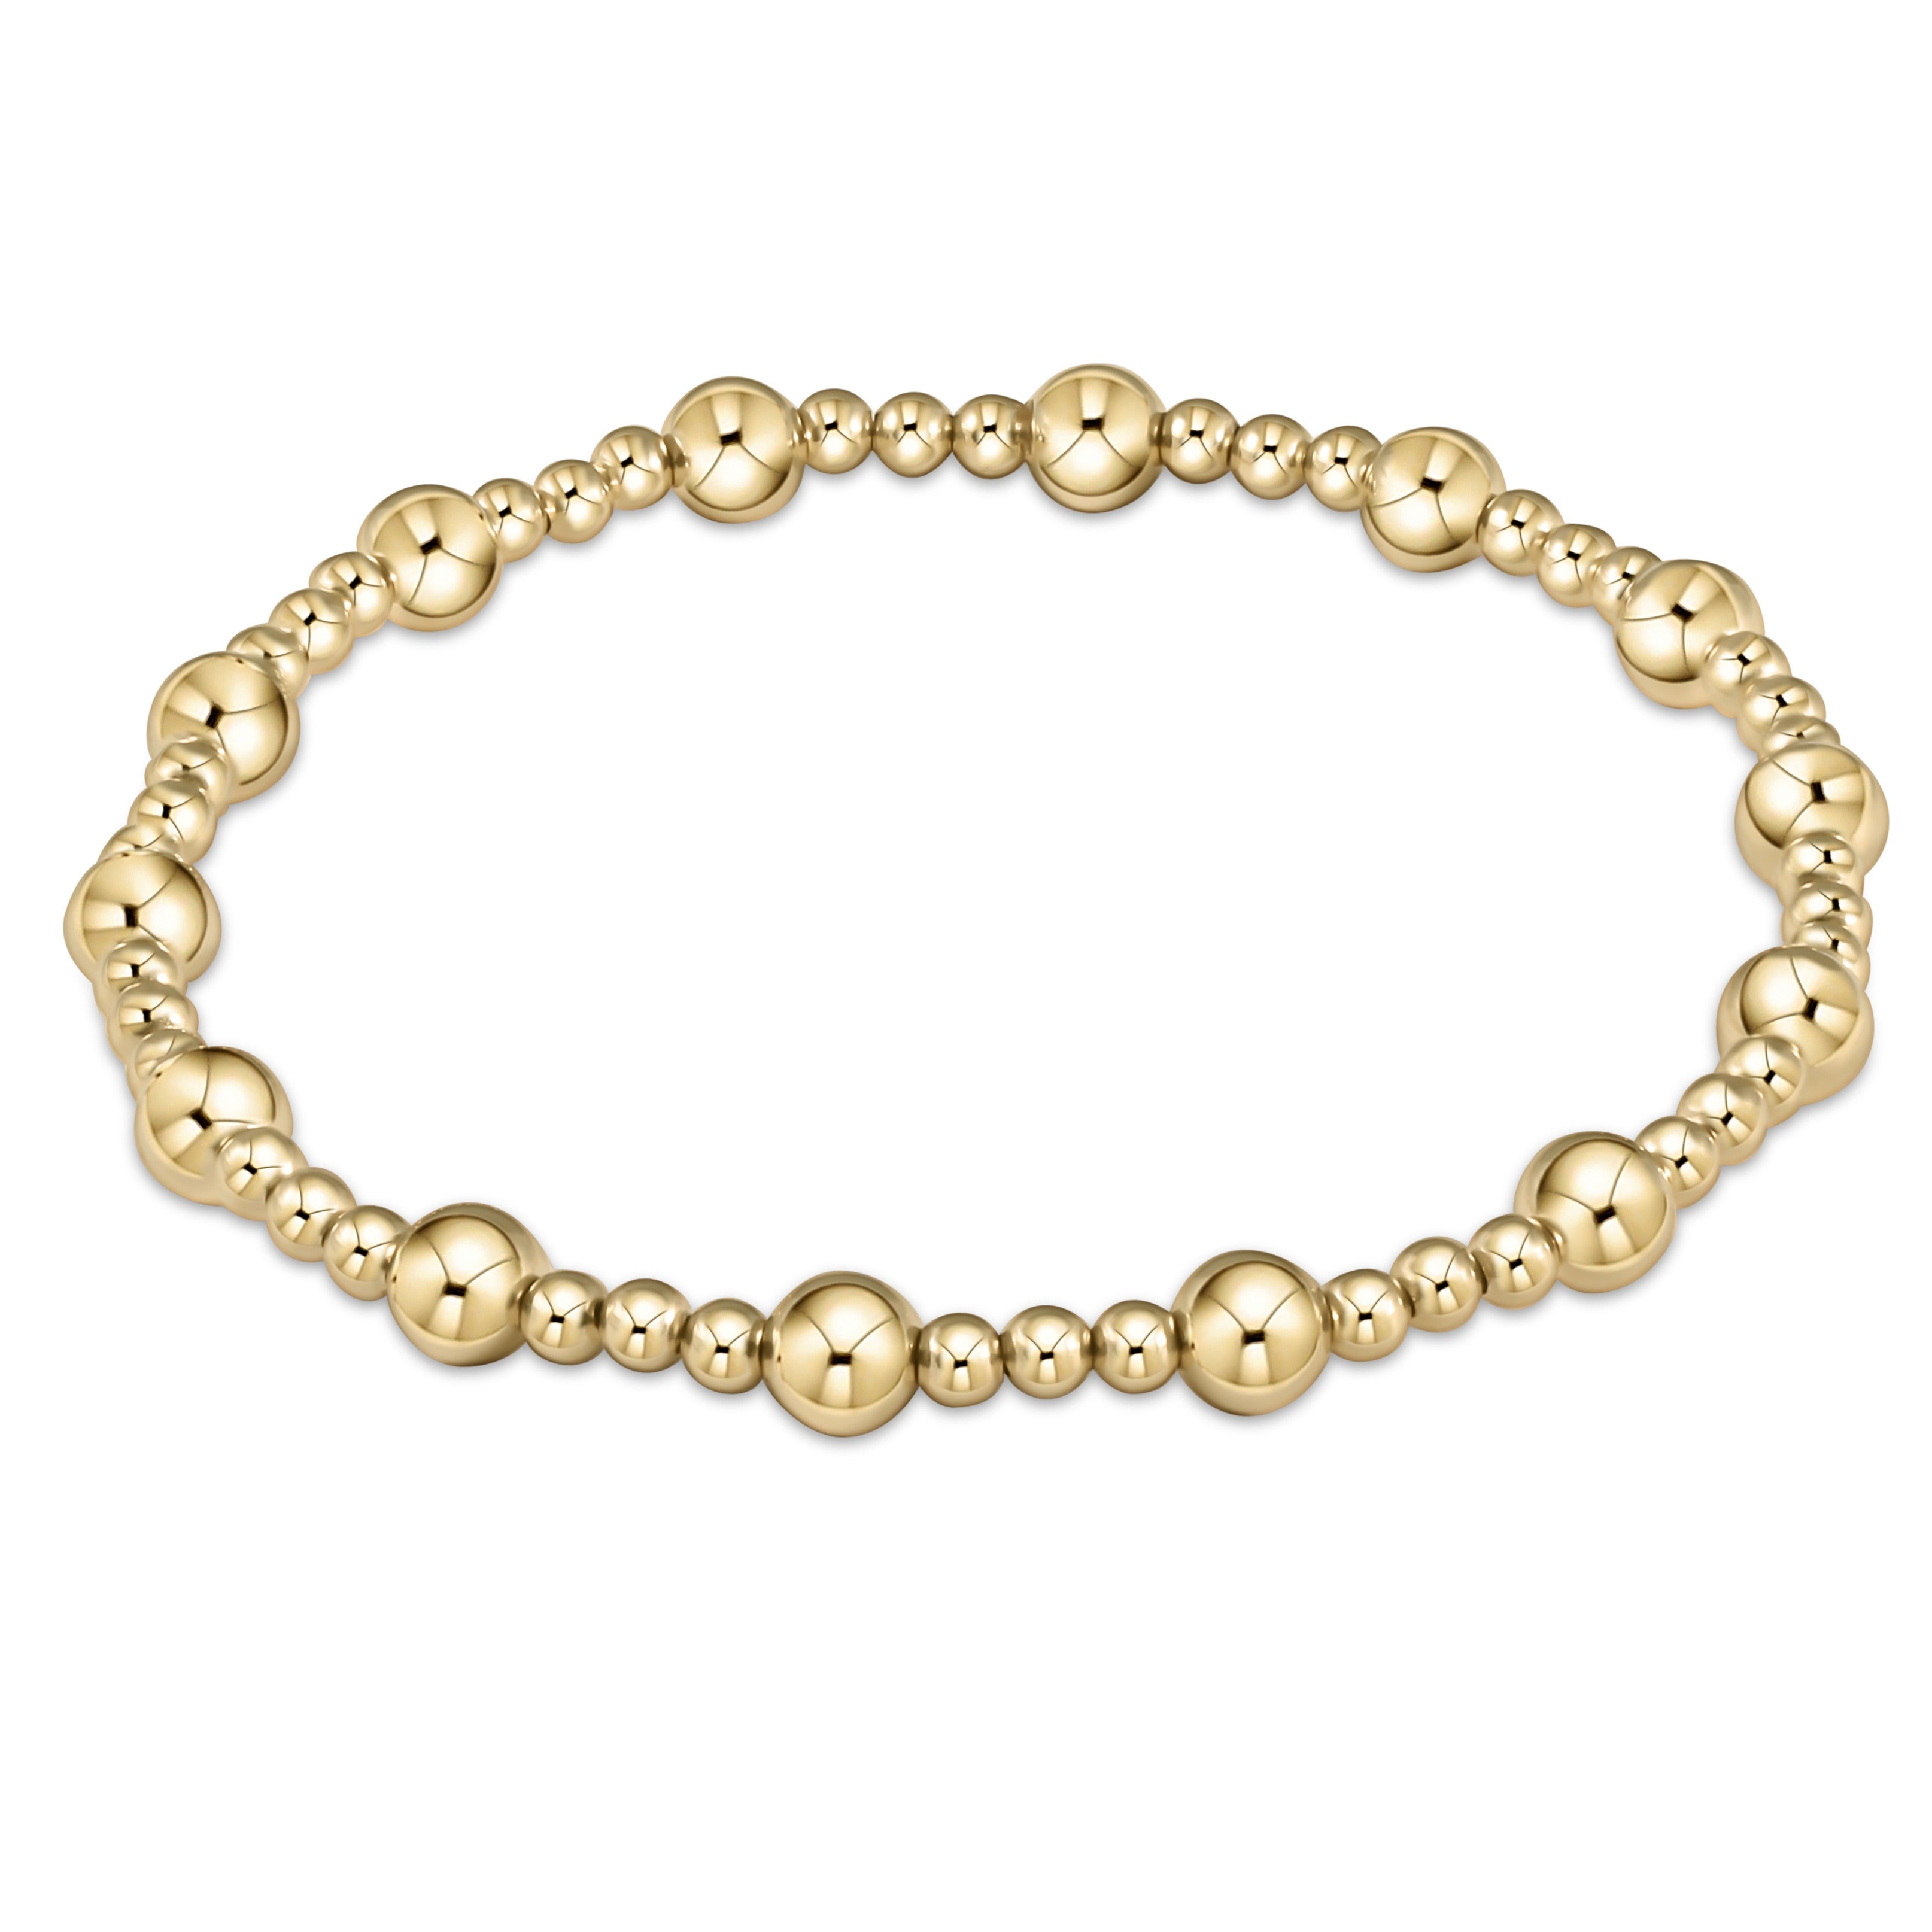 enewton Extends - Classic Sincerity Pattern 5mm Bead Bracelet - Gold